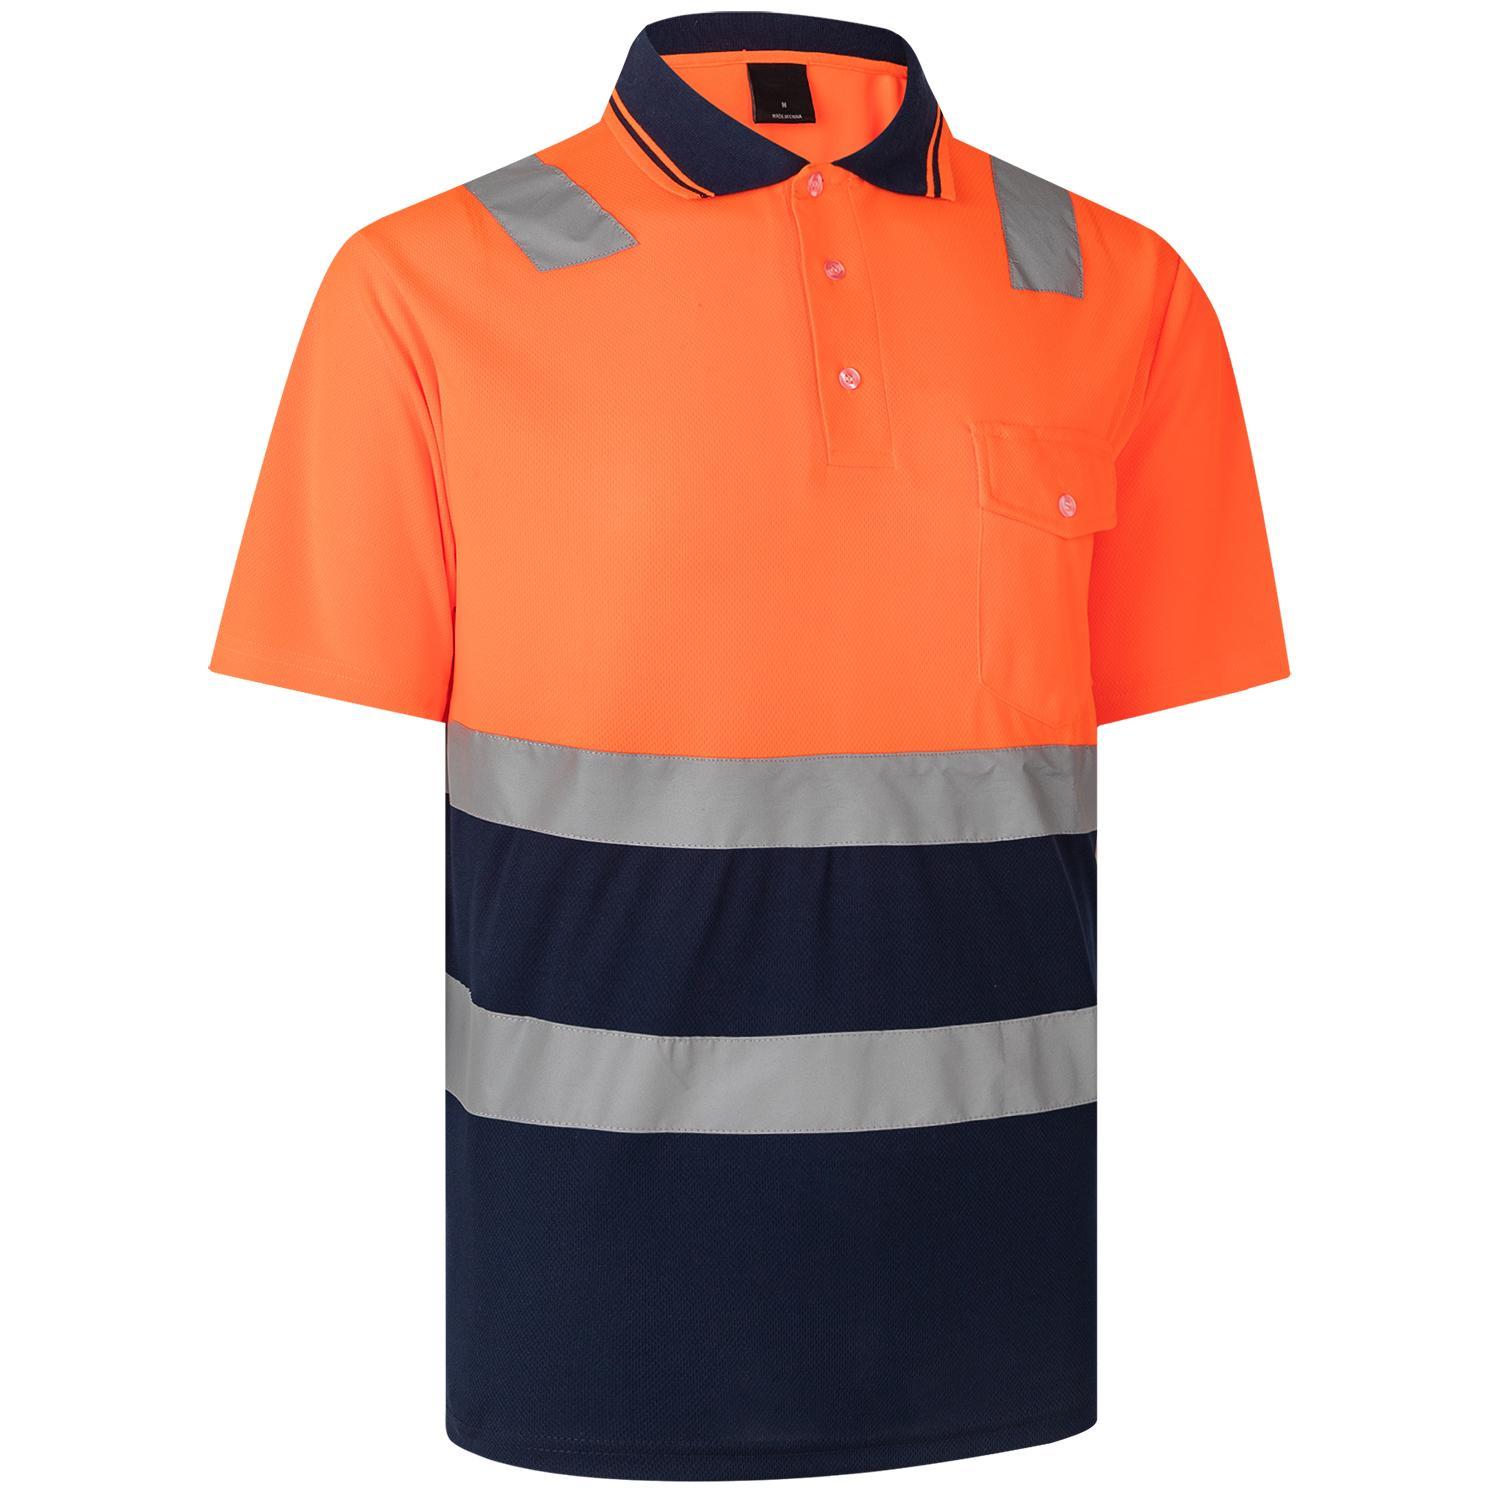 HI VIS Short Sleeve Workwear Shirt w Reflective Tape Cool Dry Safety Polo 2 Tone - Fluoro Orange / Navy, XL